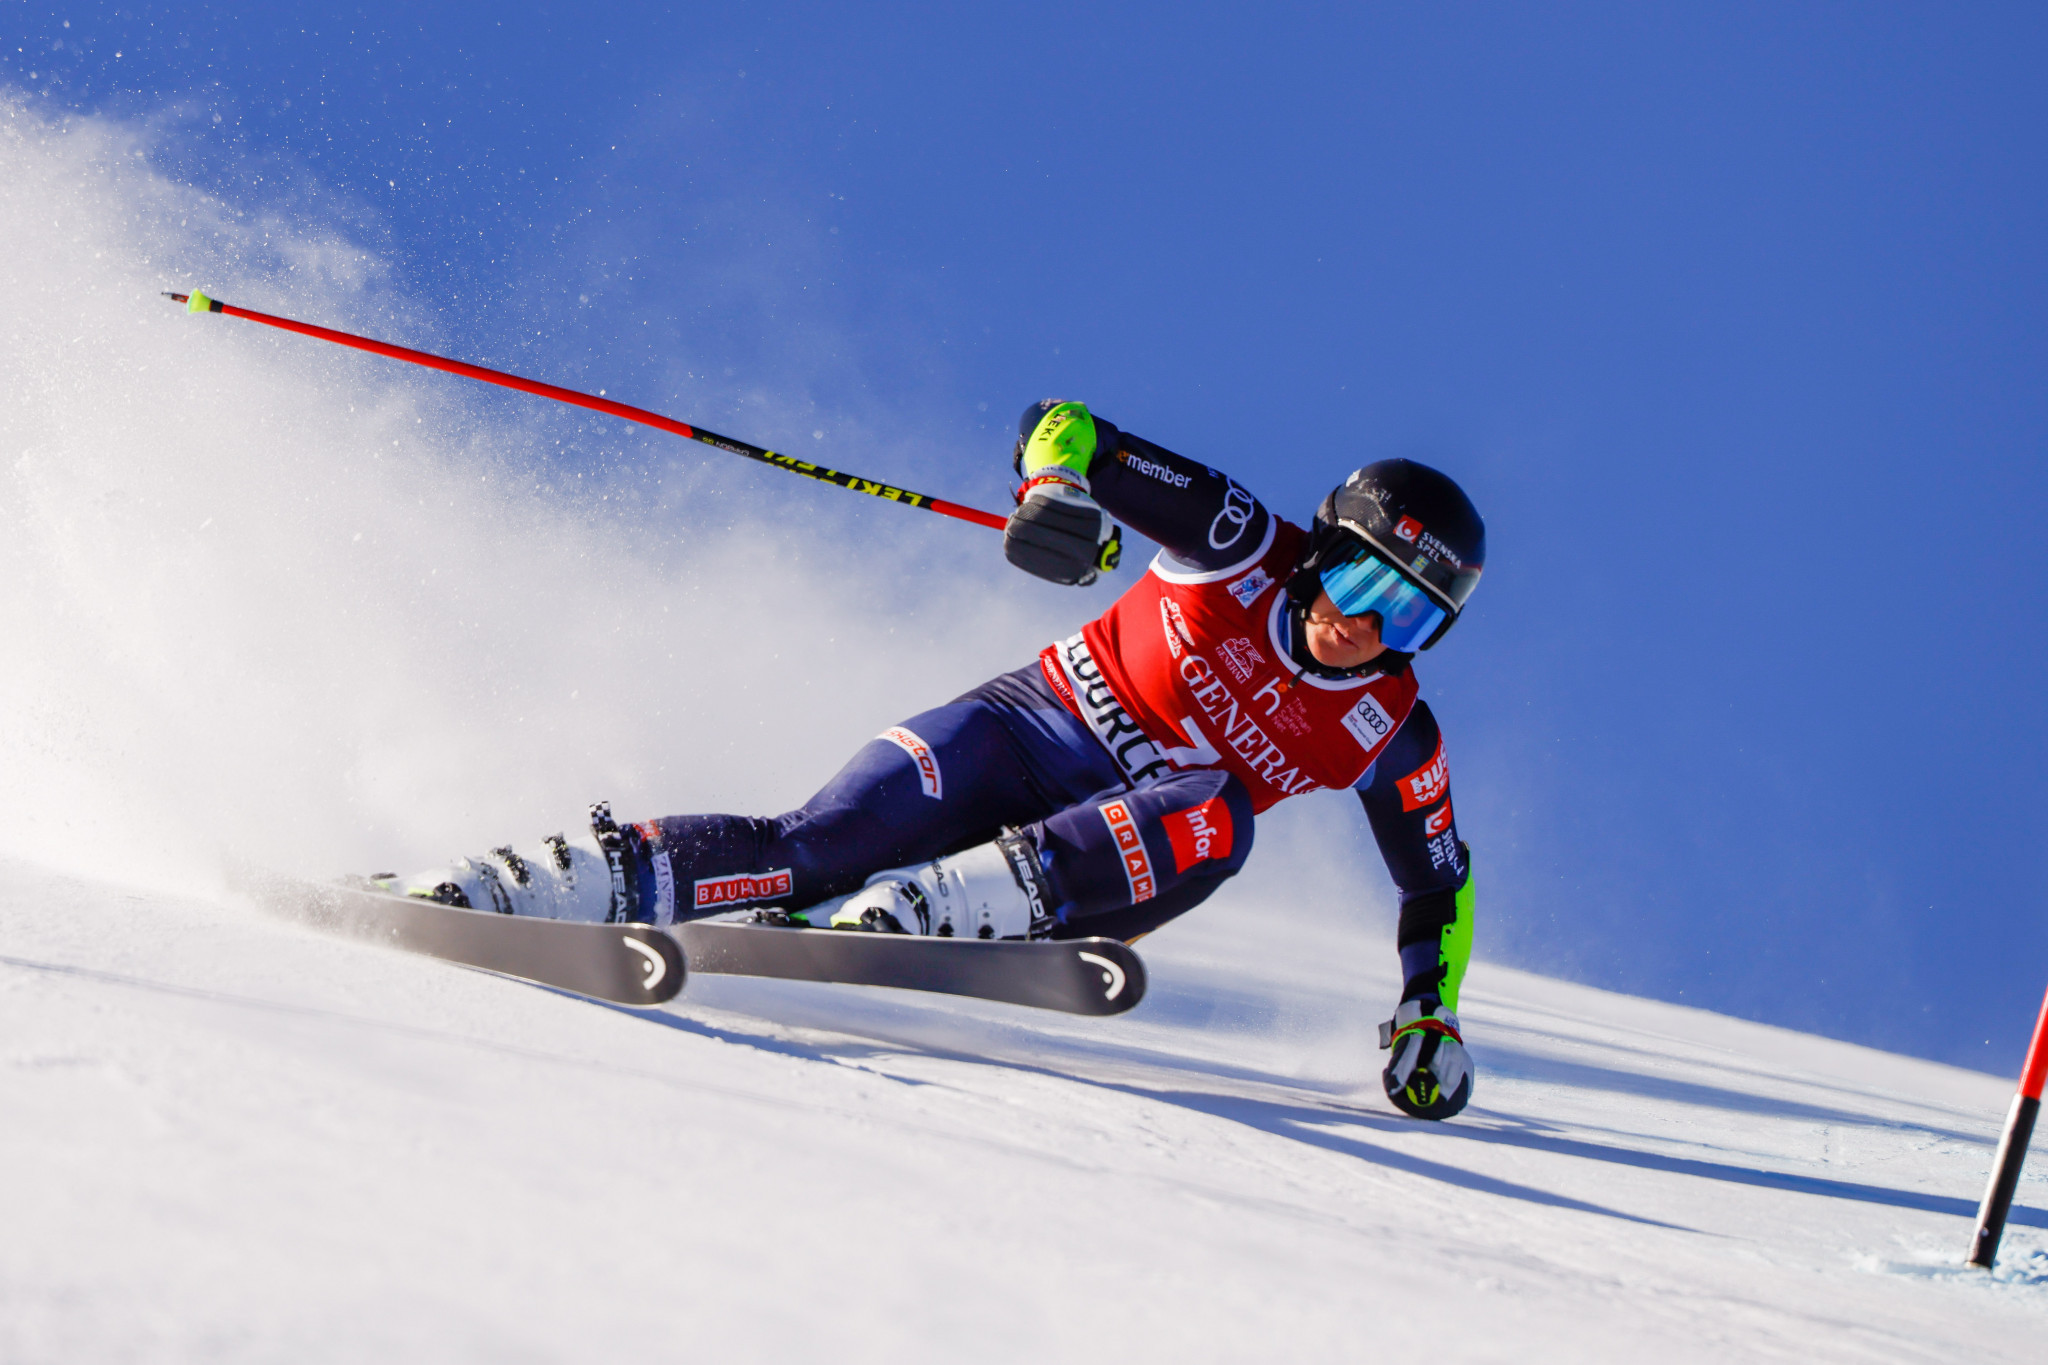 Hector and Shiffrin giant slalom favourites for Kronplatz Alpine Ski World Cup